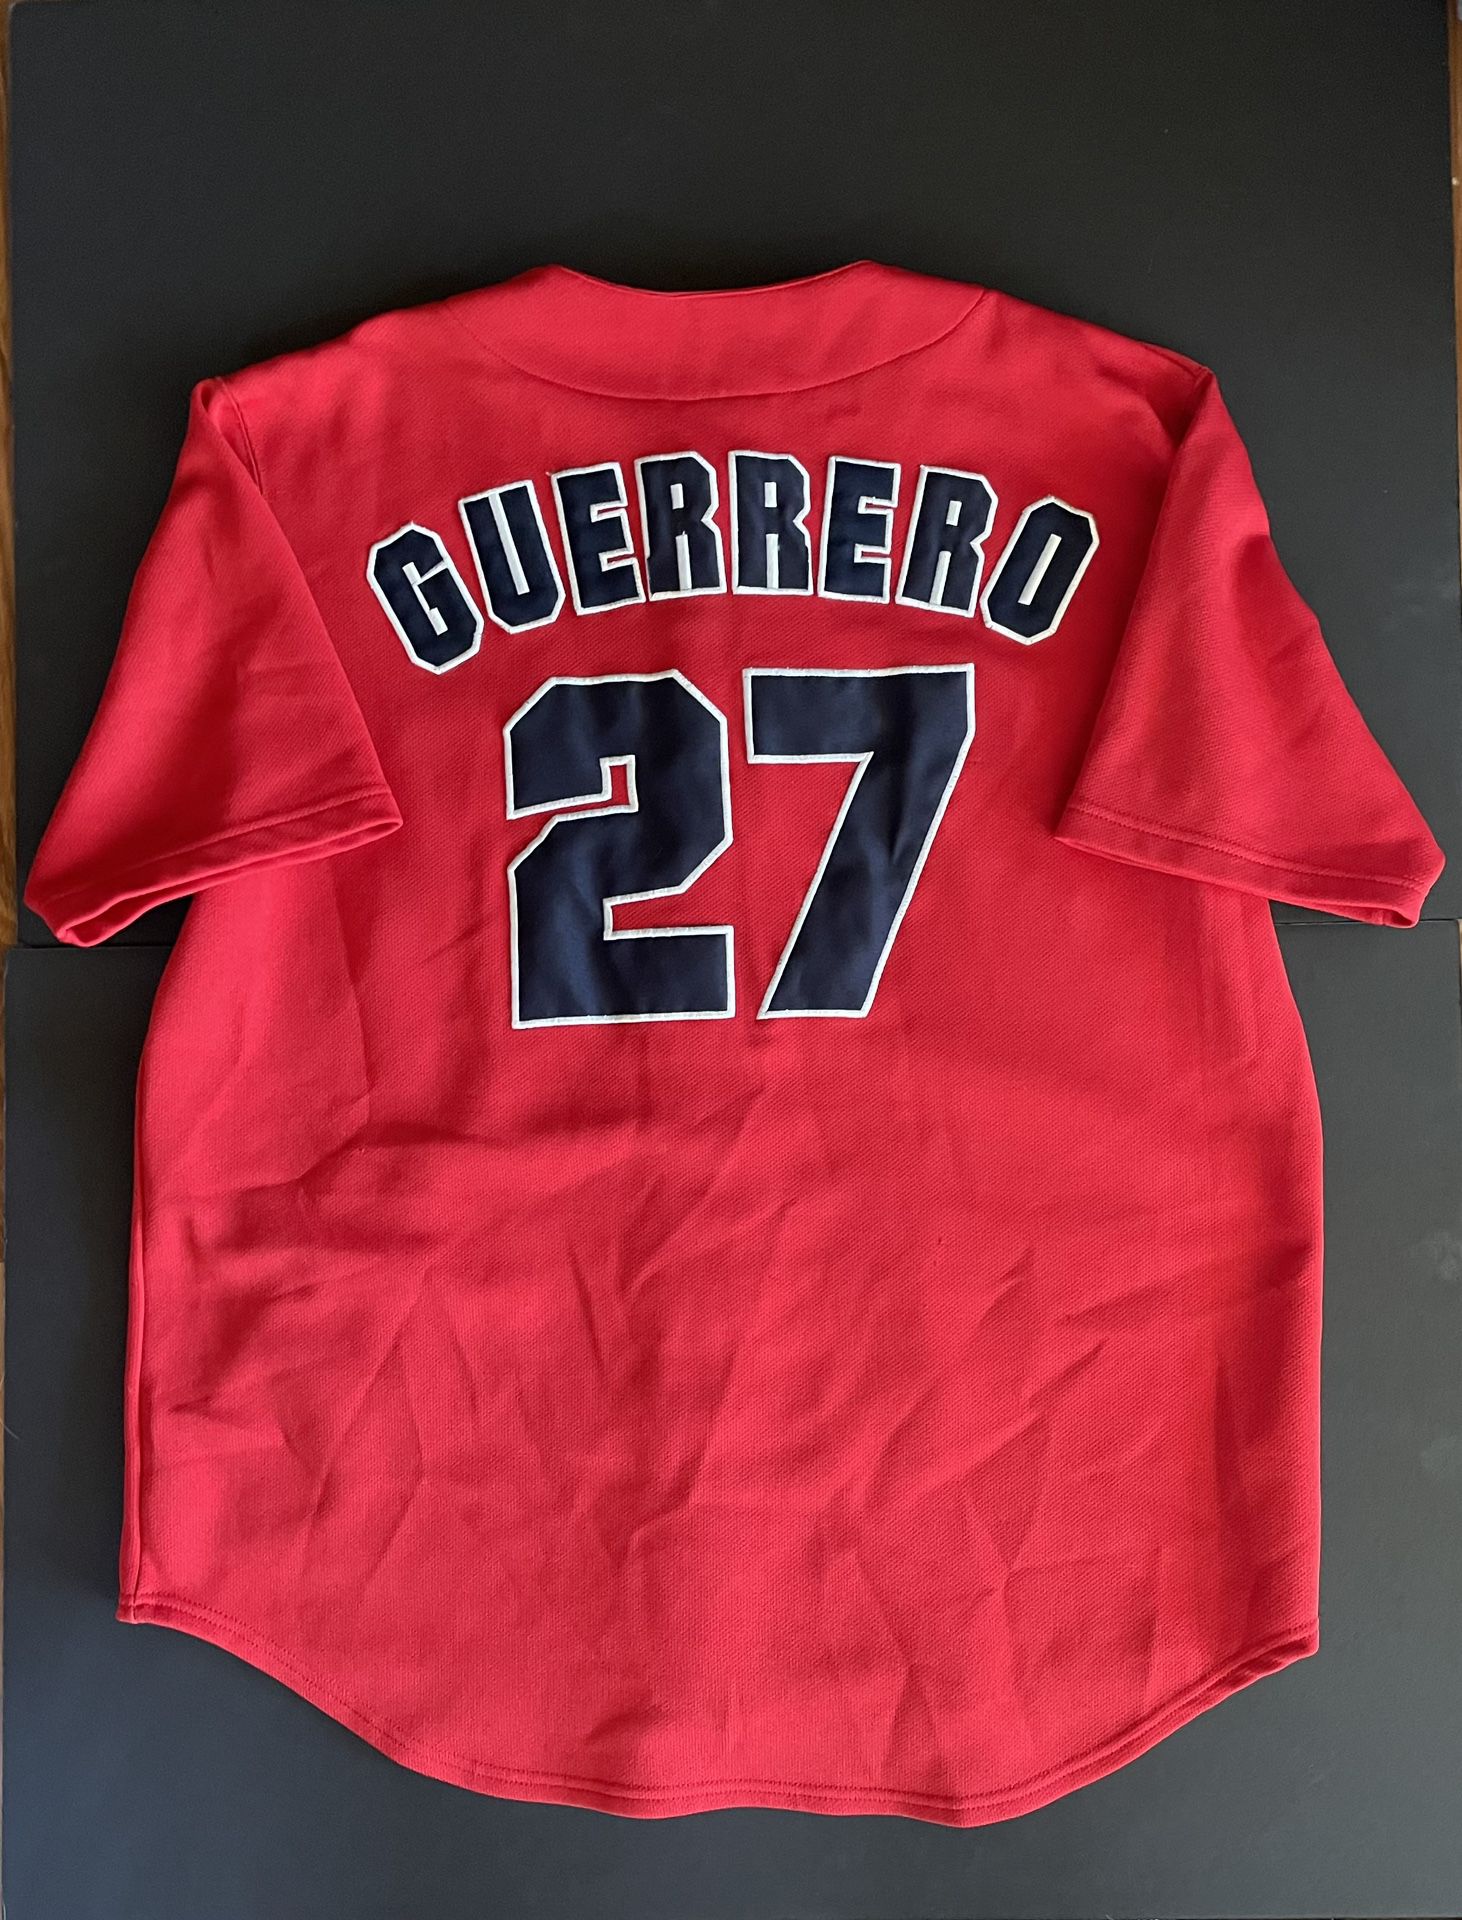 Vlad Guerrero Large stitched Angles  Baseball Jersey MLB 